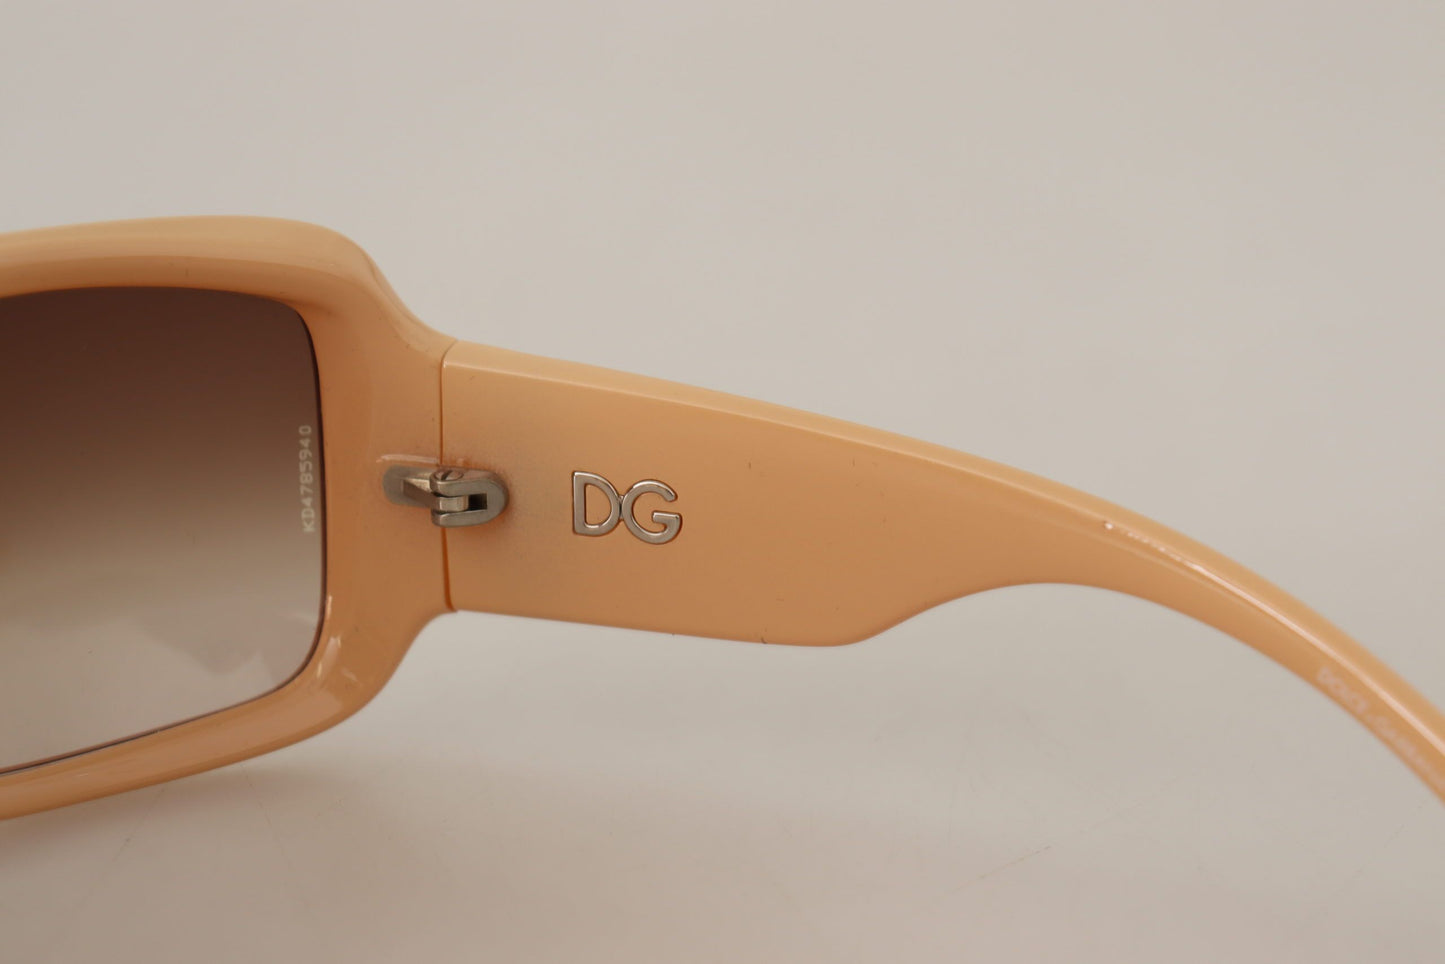 Dolce & Gabbana Beige Cat Eye PVC Frame Brown Lenses Shades Sunglasses